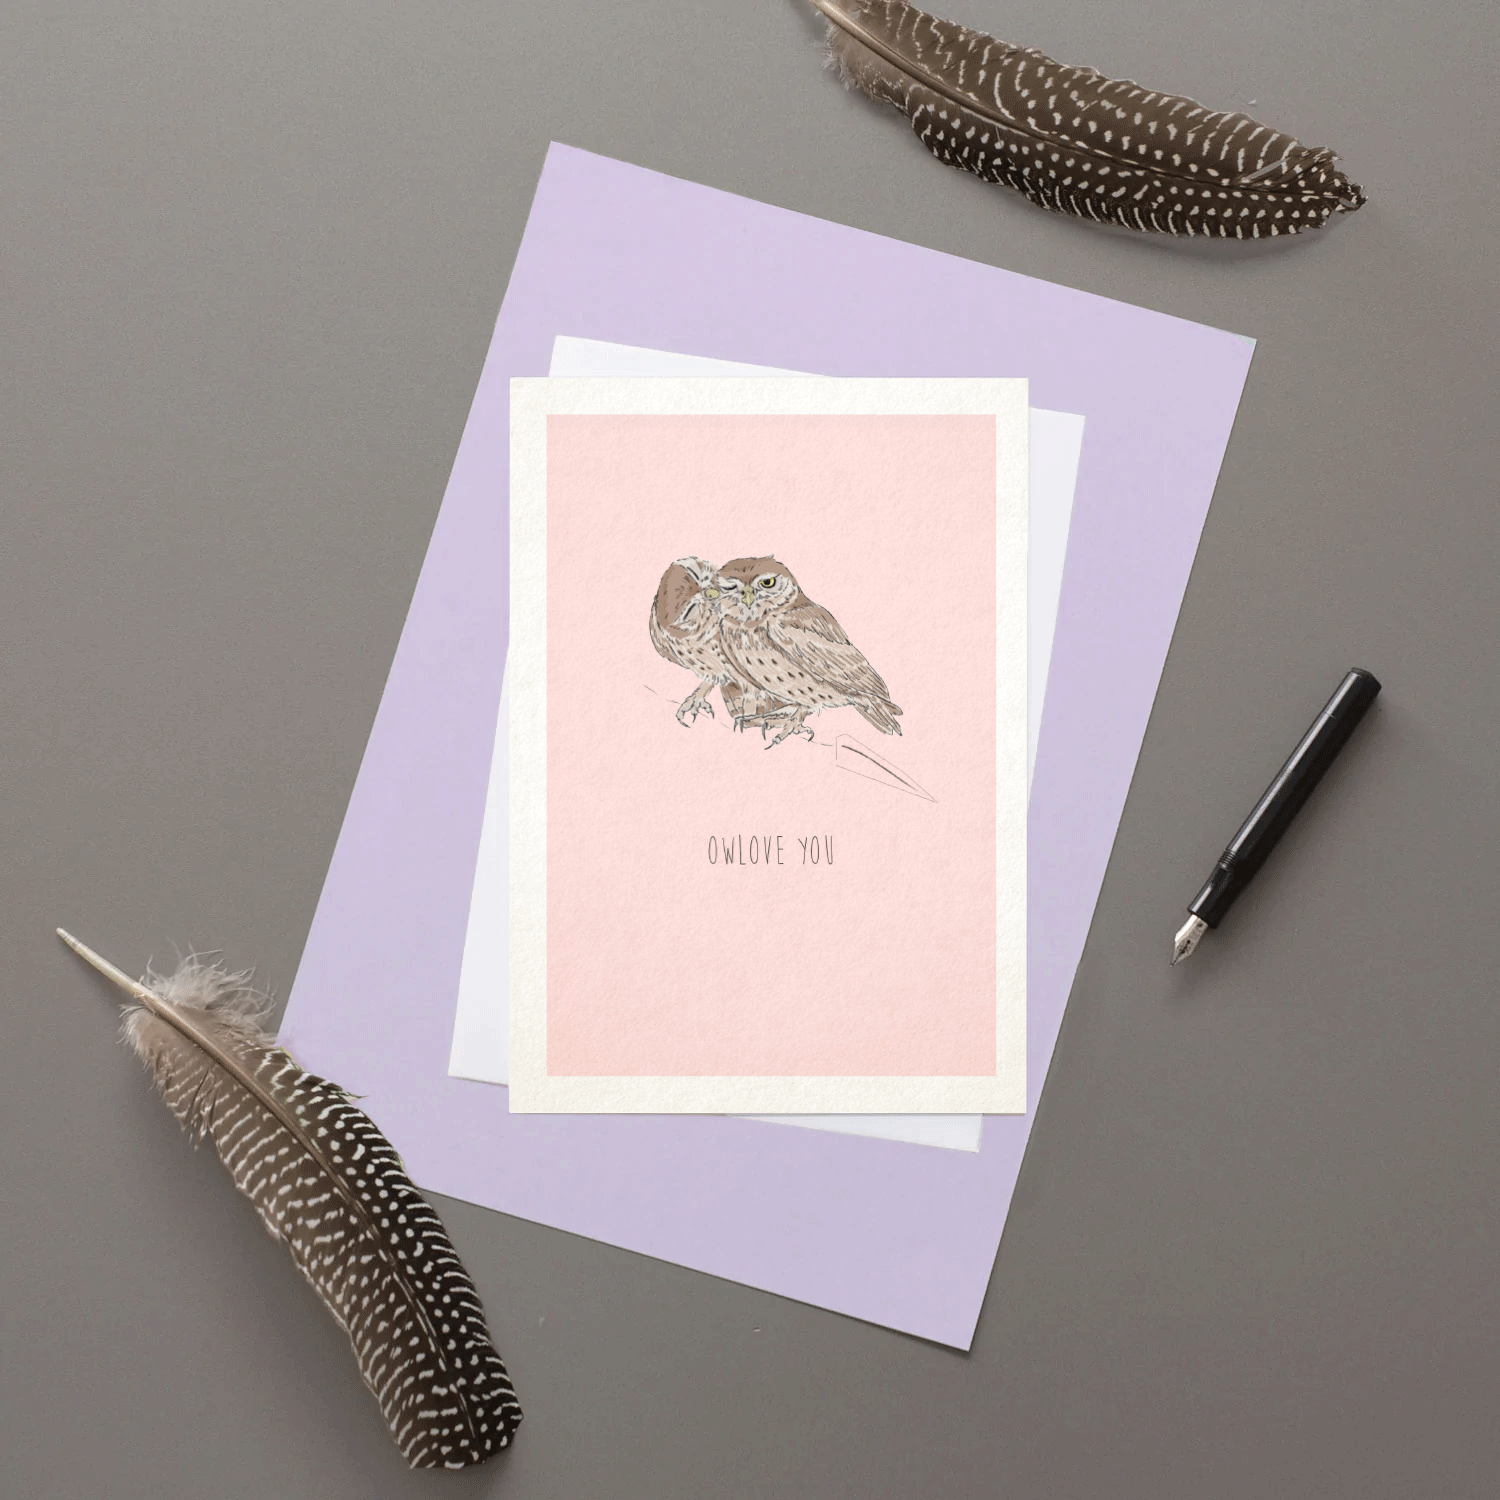 Owlove You - Greeting Card